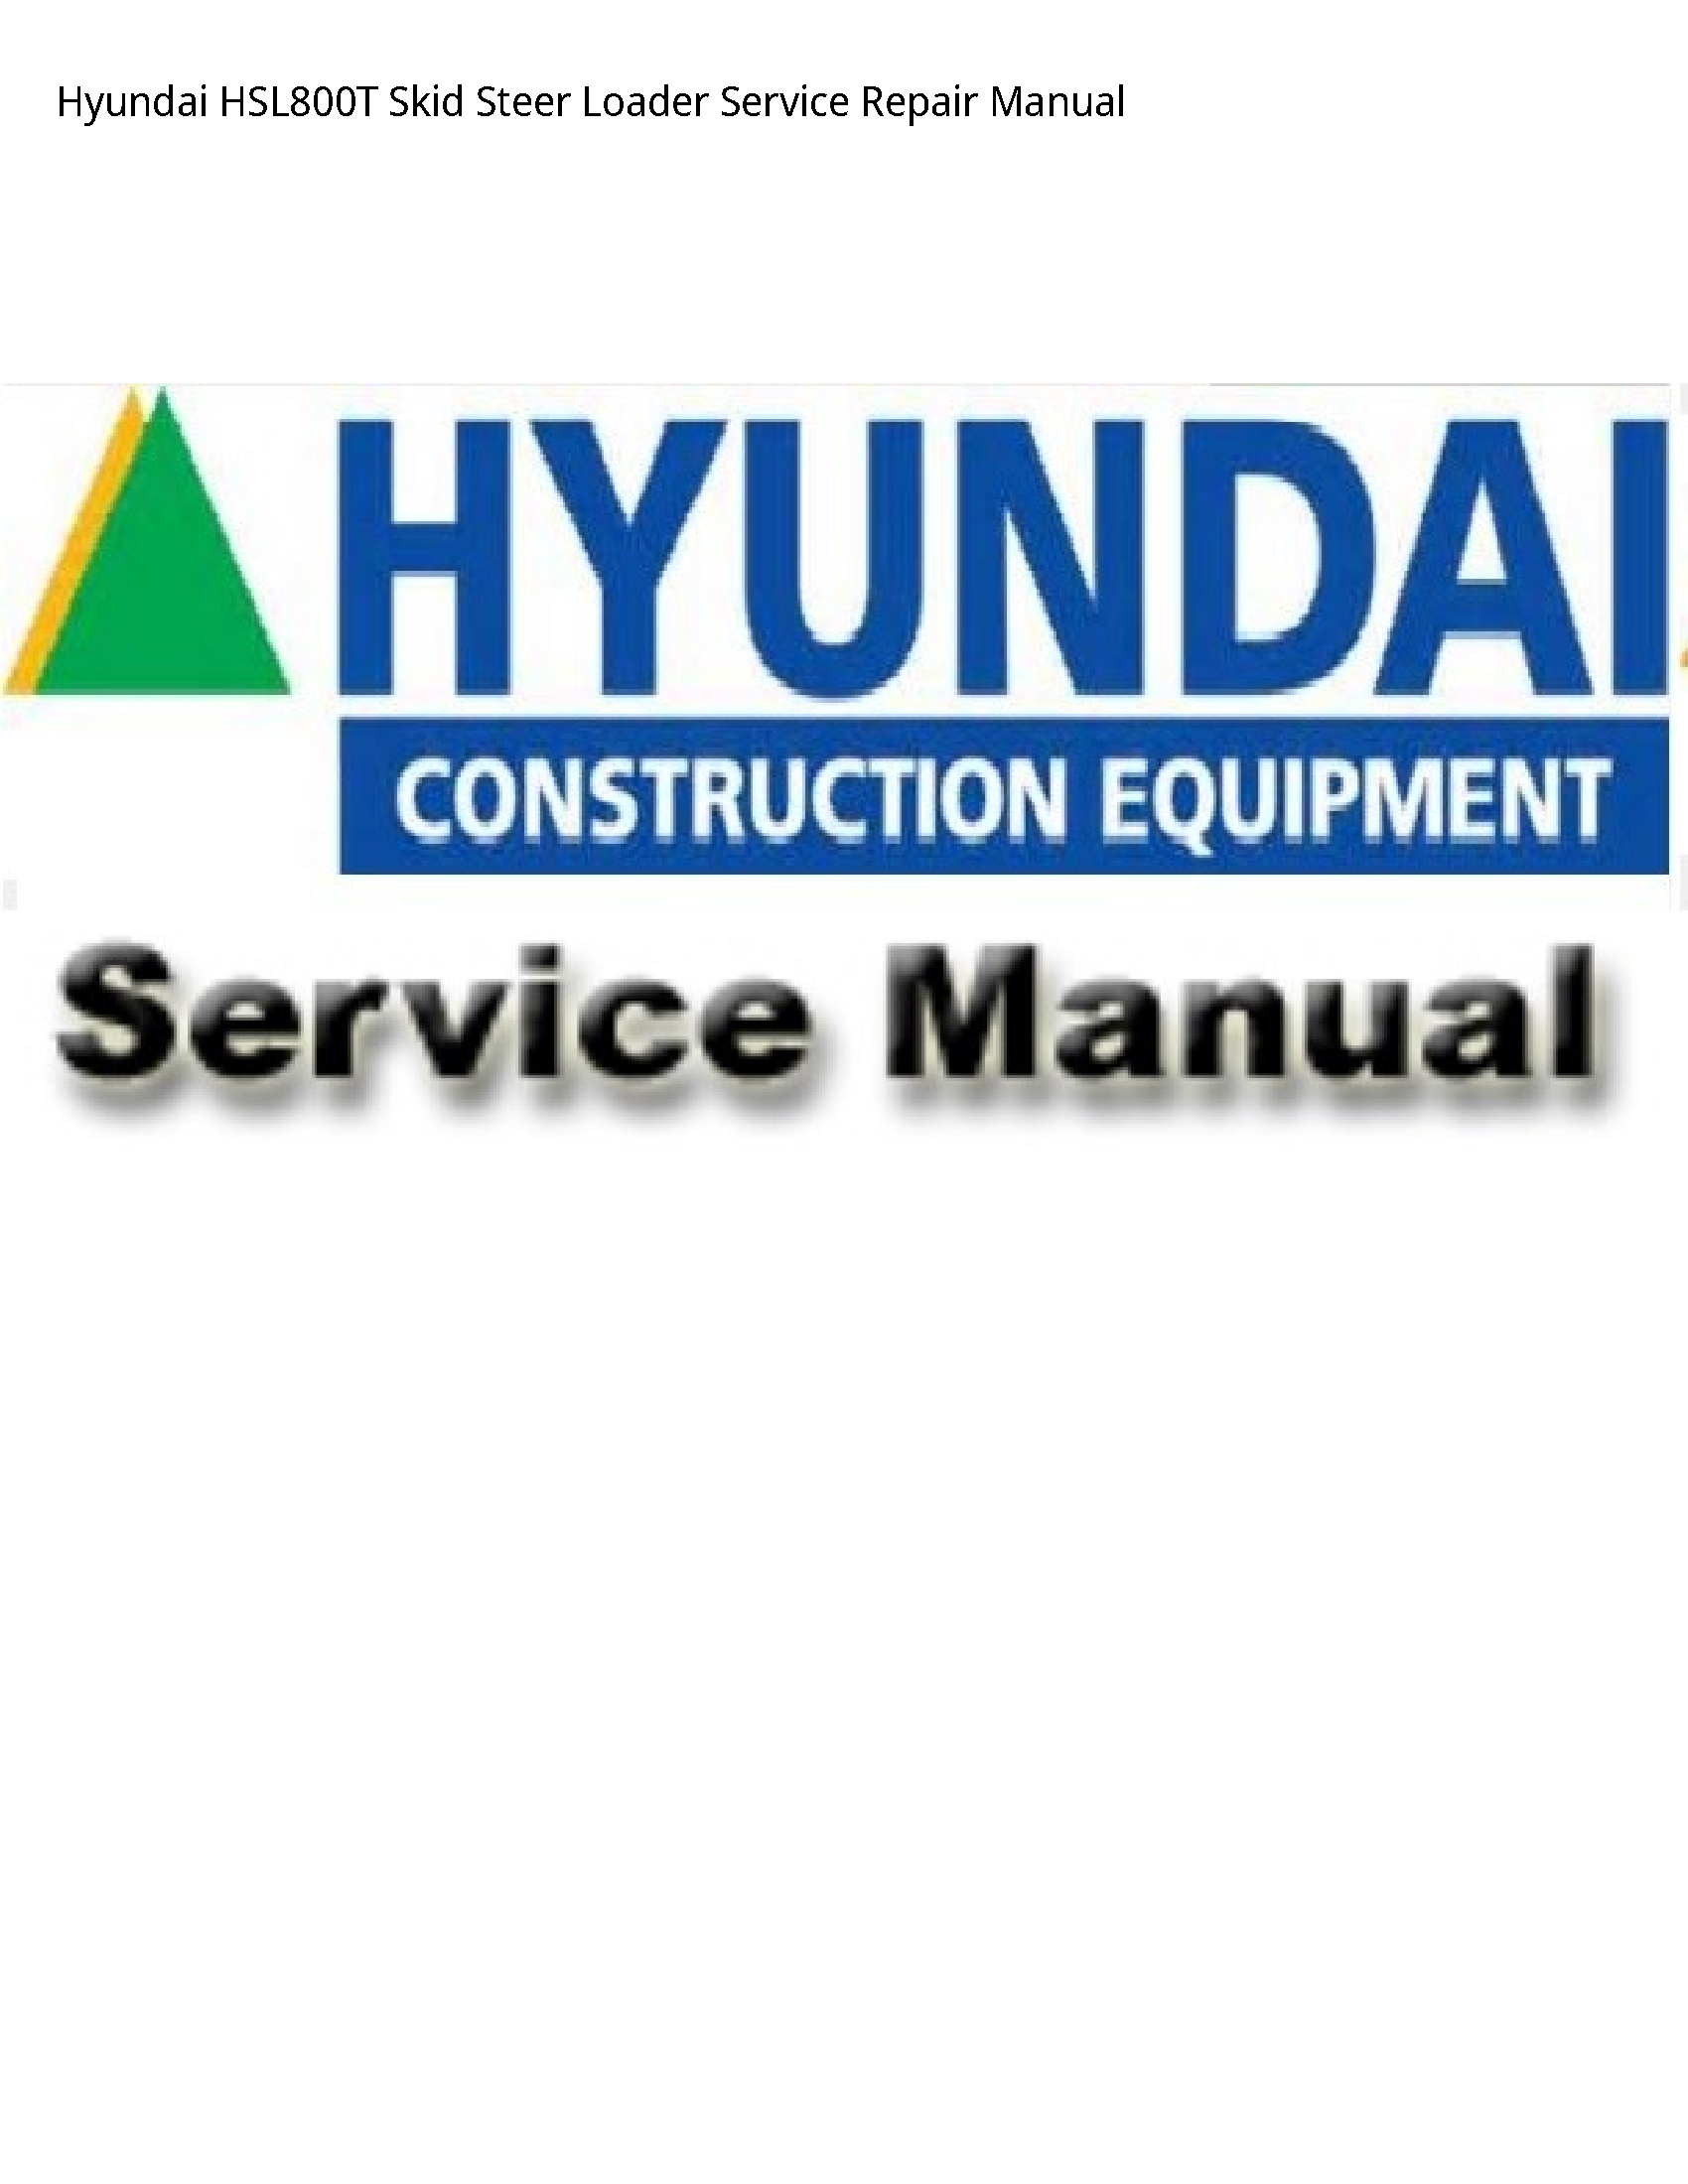 Hyundai HSL800T Skid Steer Loader manual